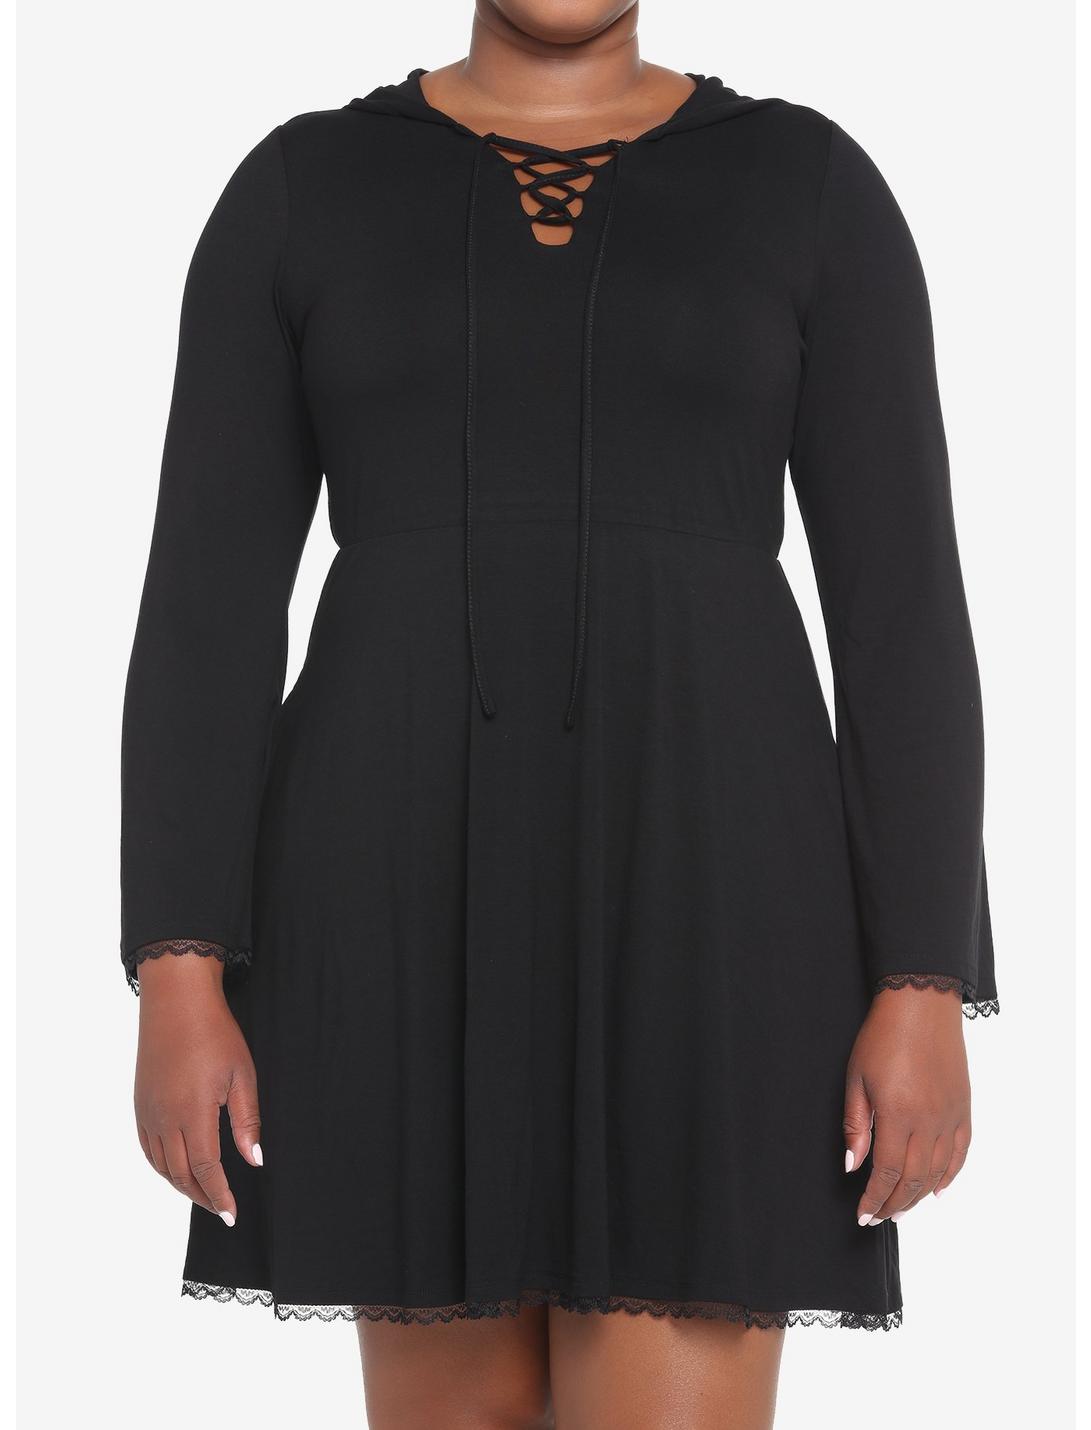 Black Lace-Up Front Hooded Dress Plus Size, DEEP BLACK, hi-res